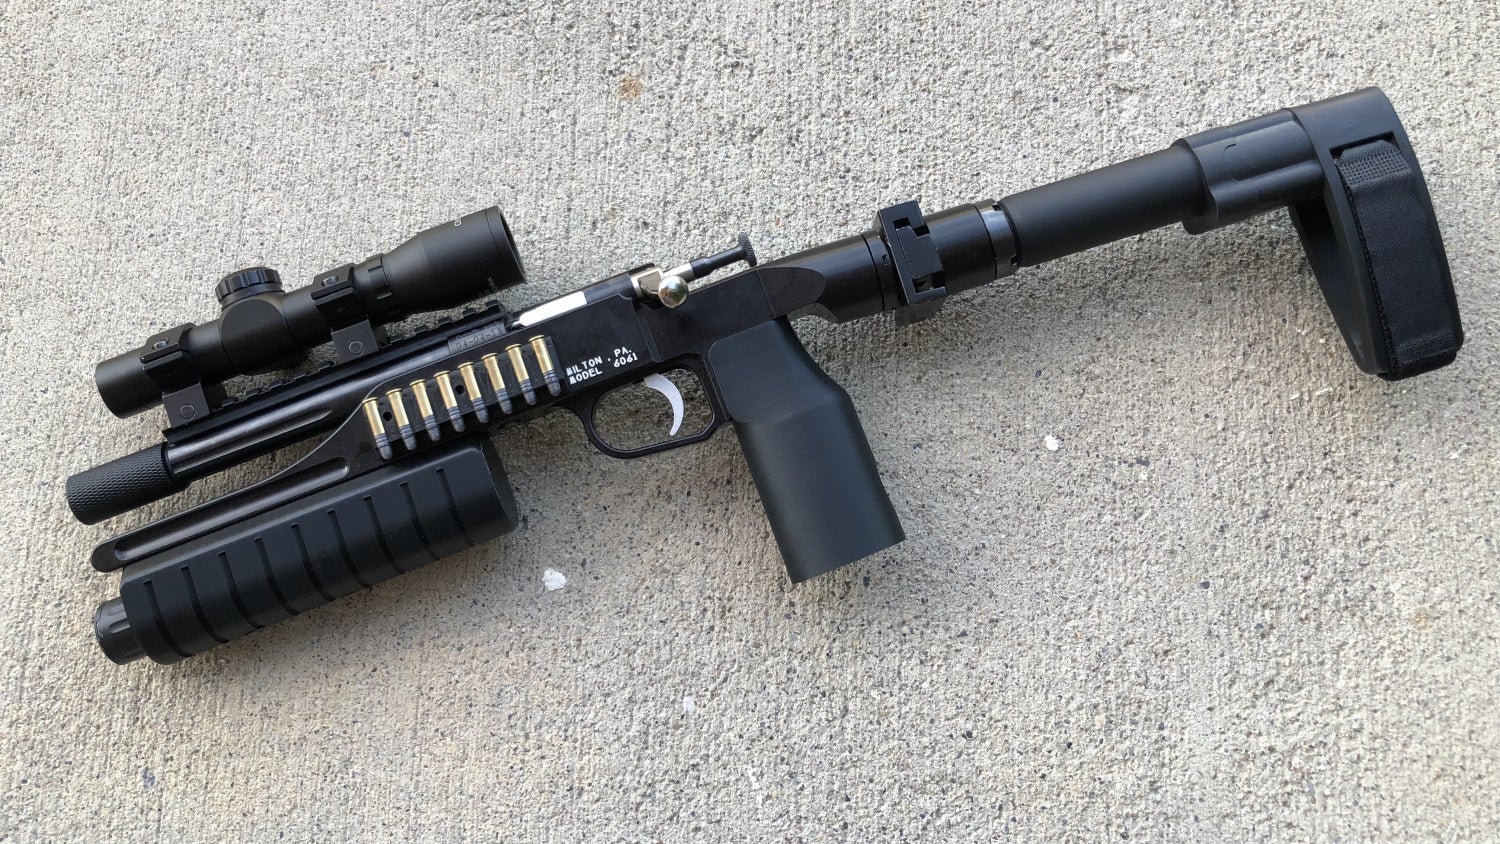 3D printed survival gun chassis